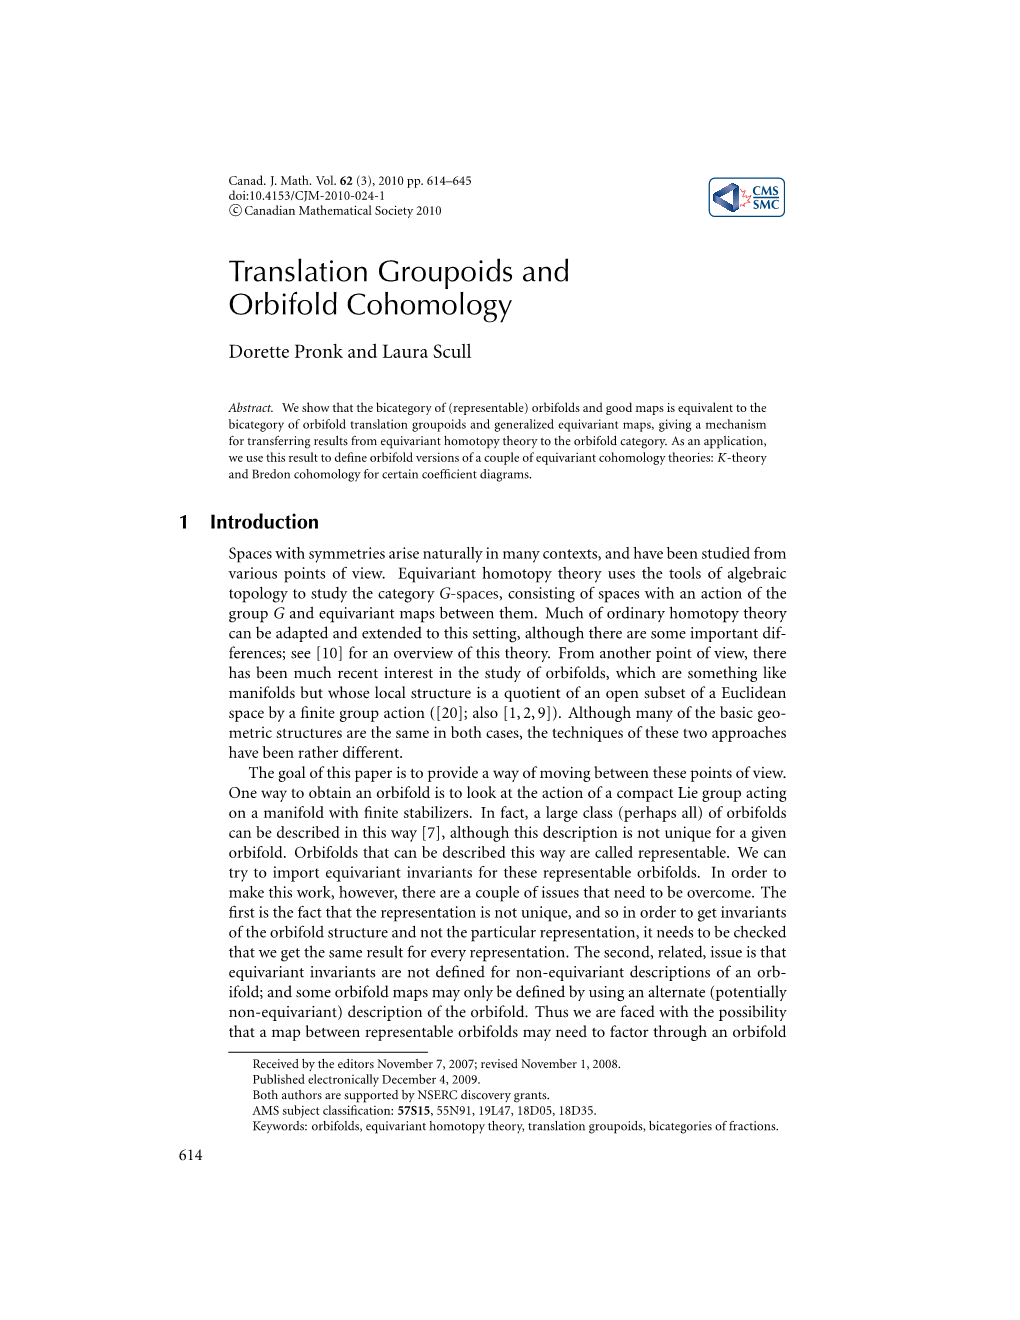 Translation Groupoids and Orbifold Cohomology